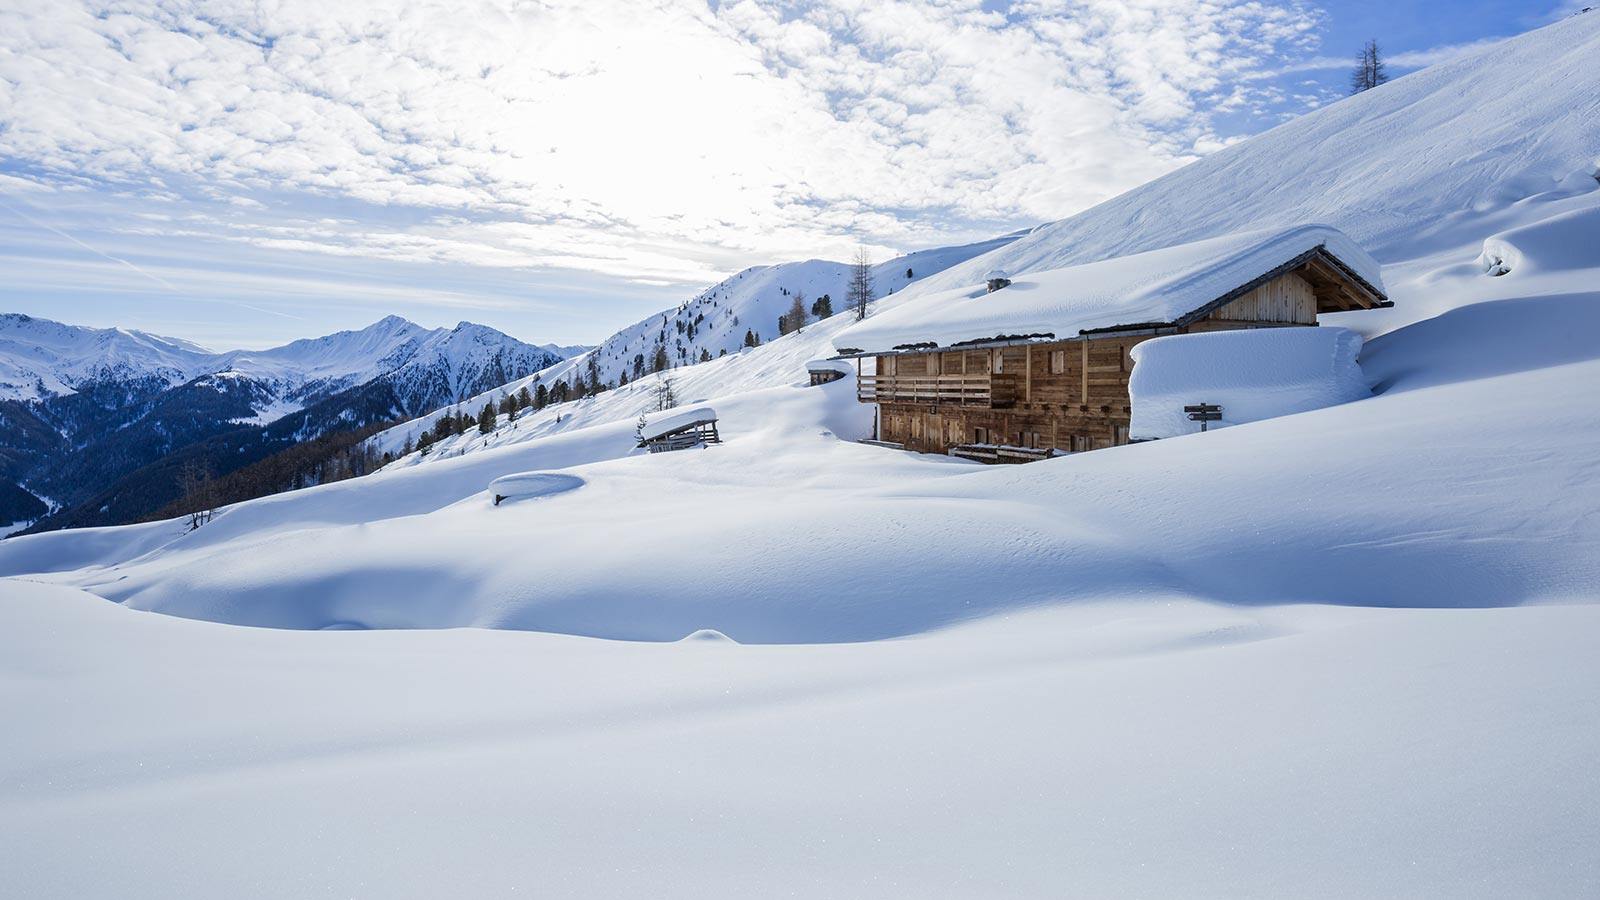 Snowy landscape in the Gsiesertal valley in winter